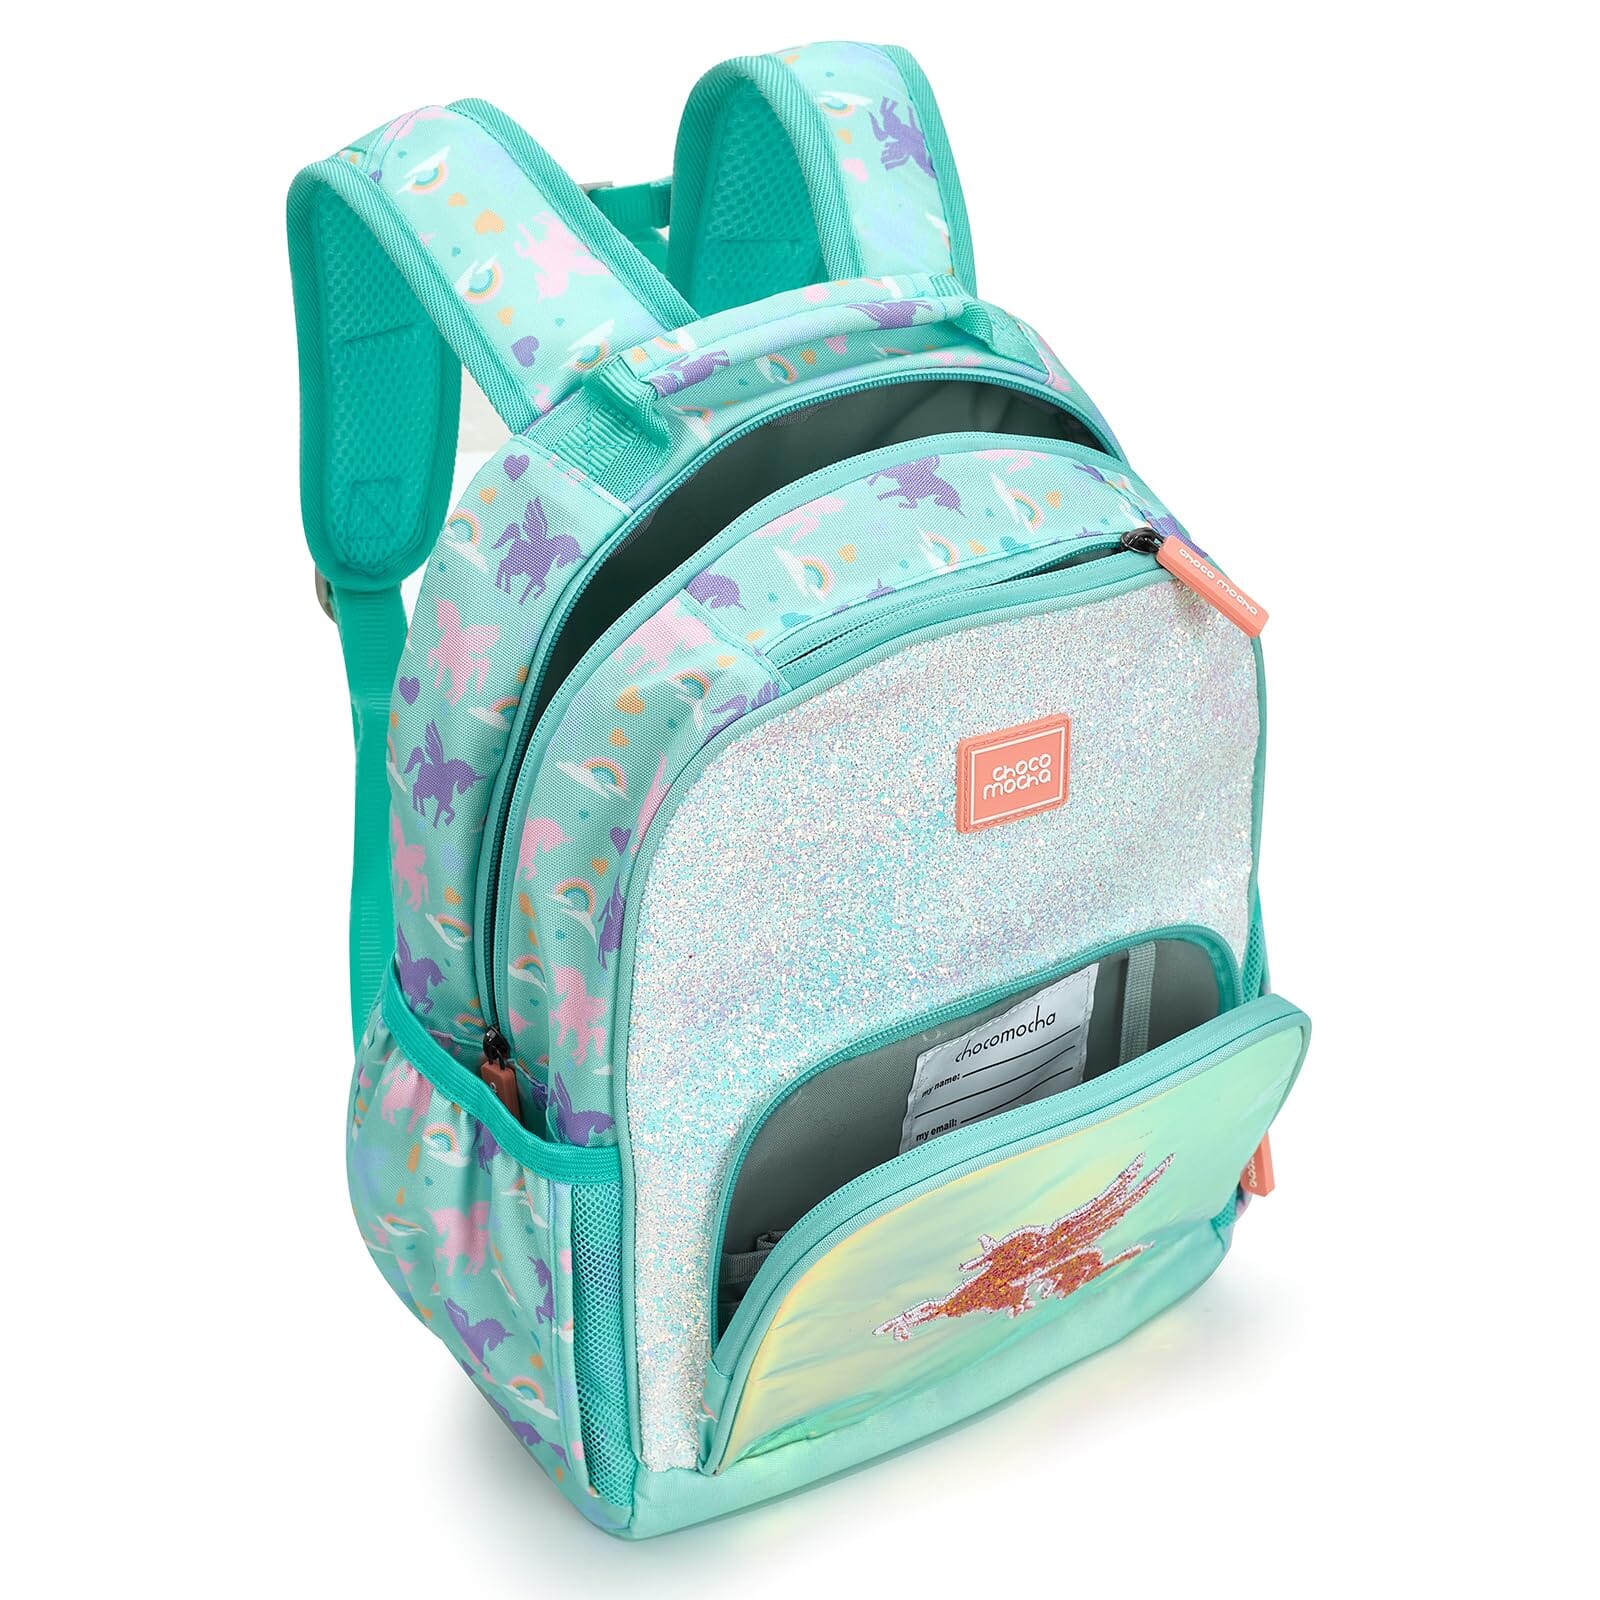 Choco Mocha Unicorn Toddler Backpack for Girls, Kids Preschool Backpack for Toddler Kindergarten Backpack 12 Inch, Glitter Teal Green chocomochakids 